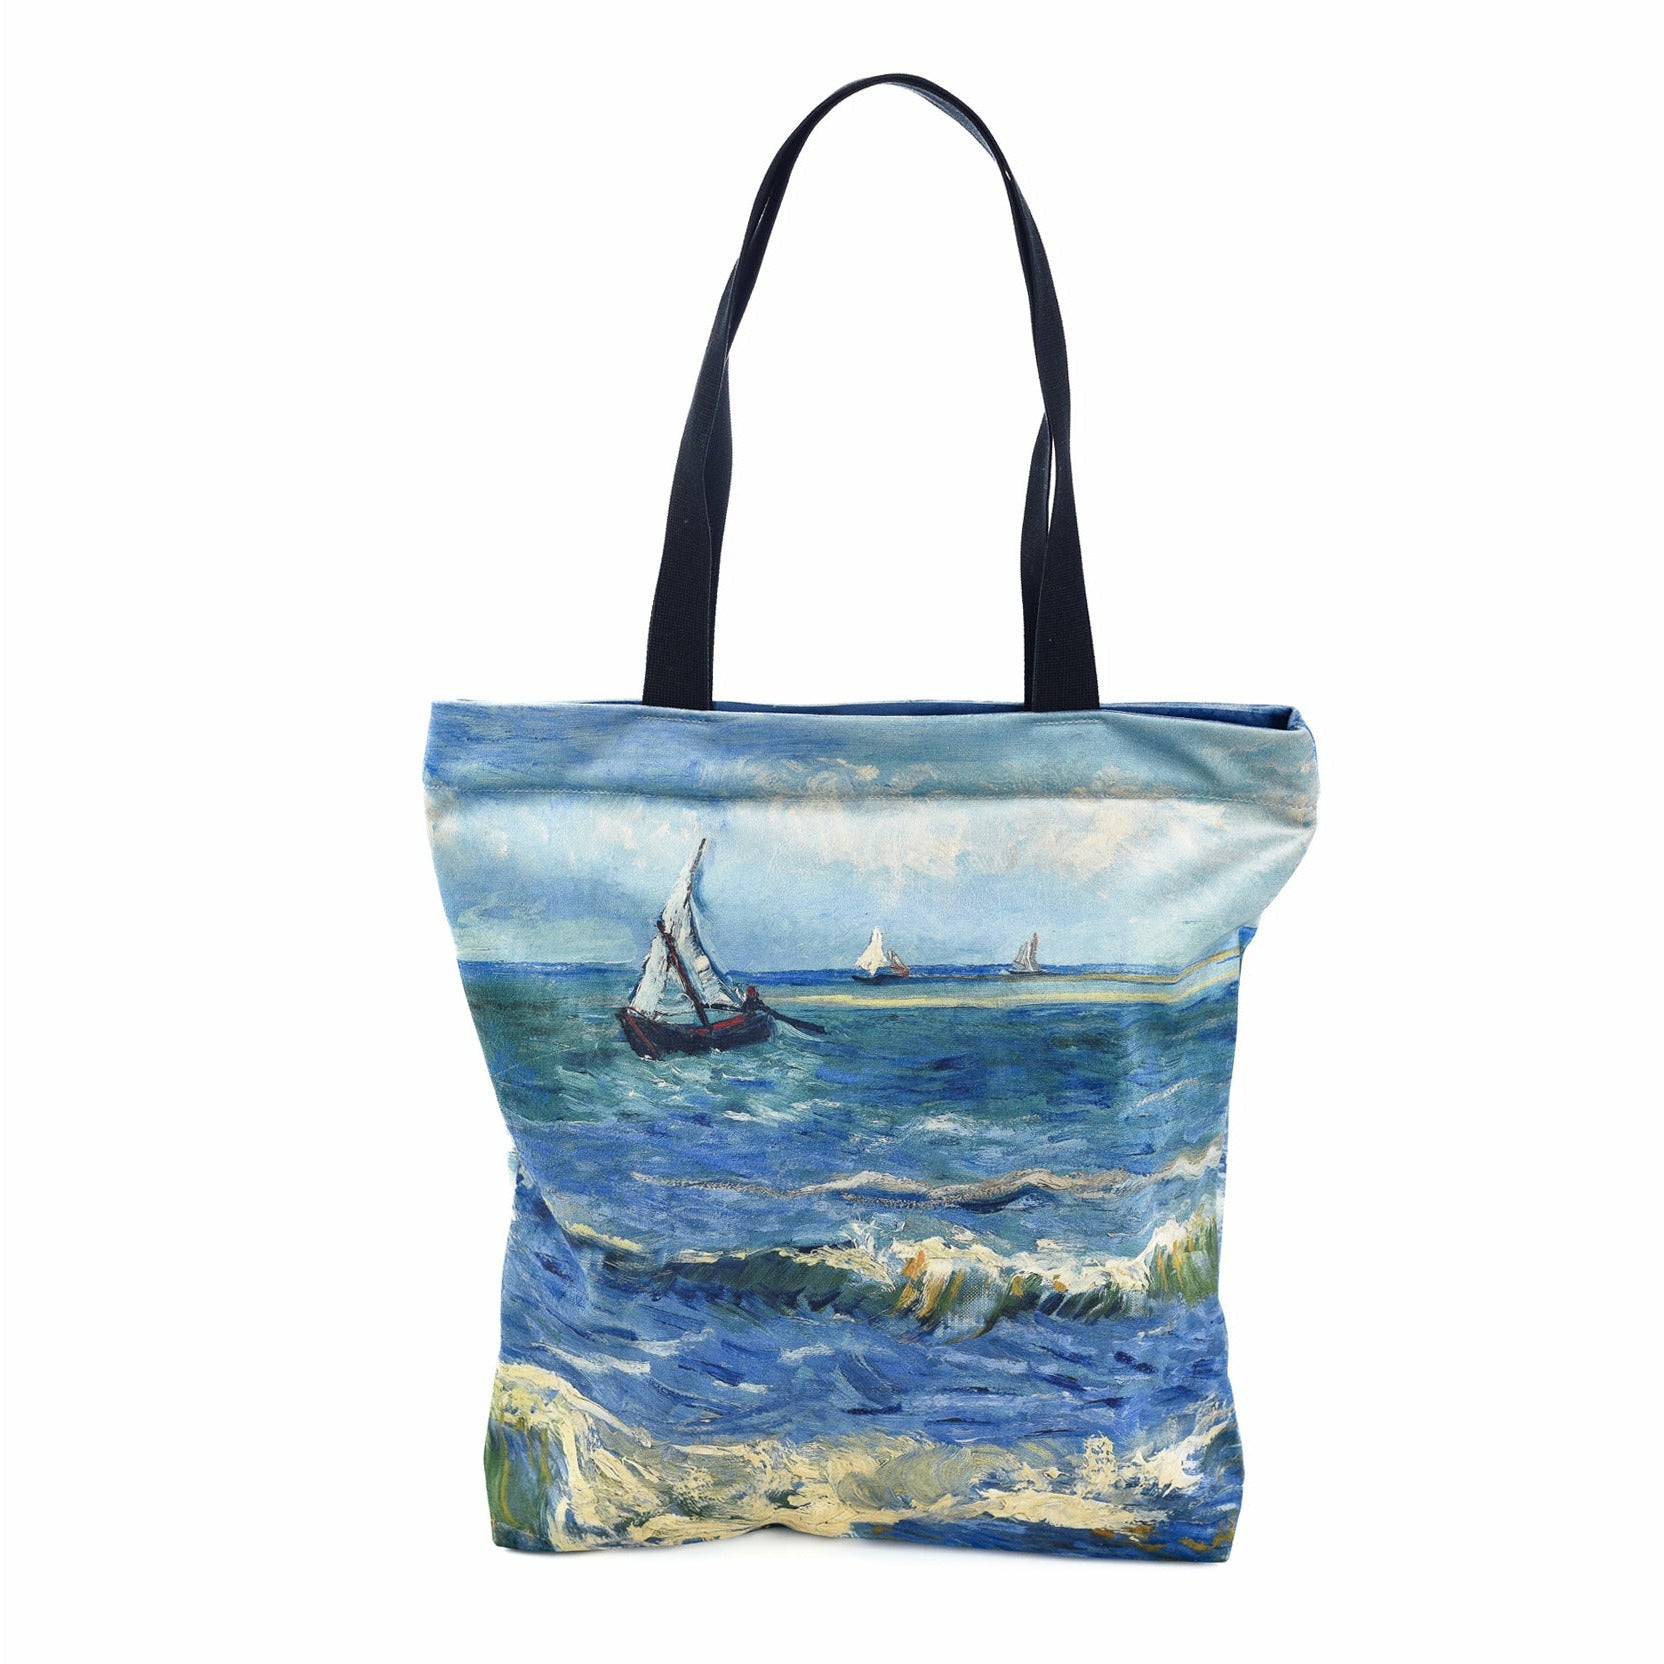 Pirkinių krepšys Vincent van Gogh "The Sea at Les Saintes-Maries-de-la-Mer"